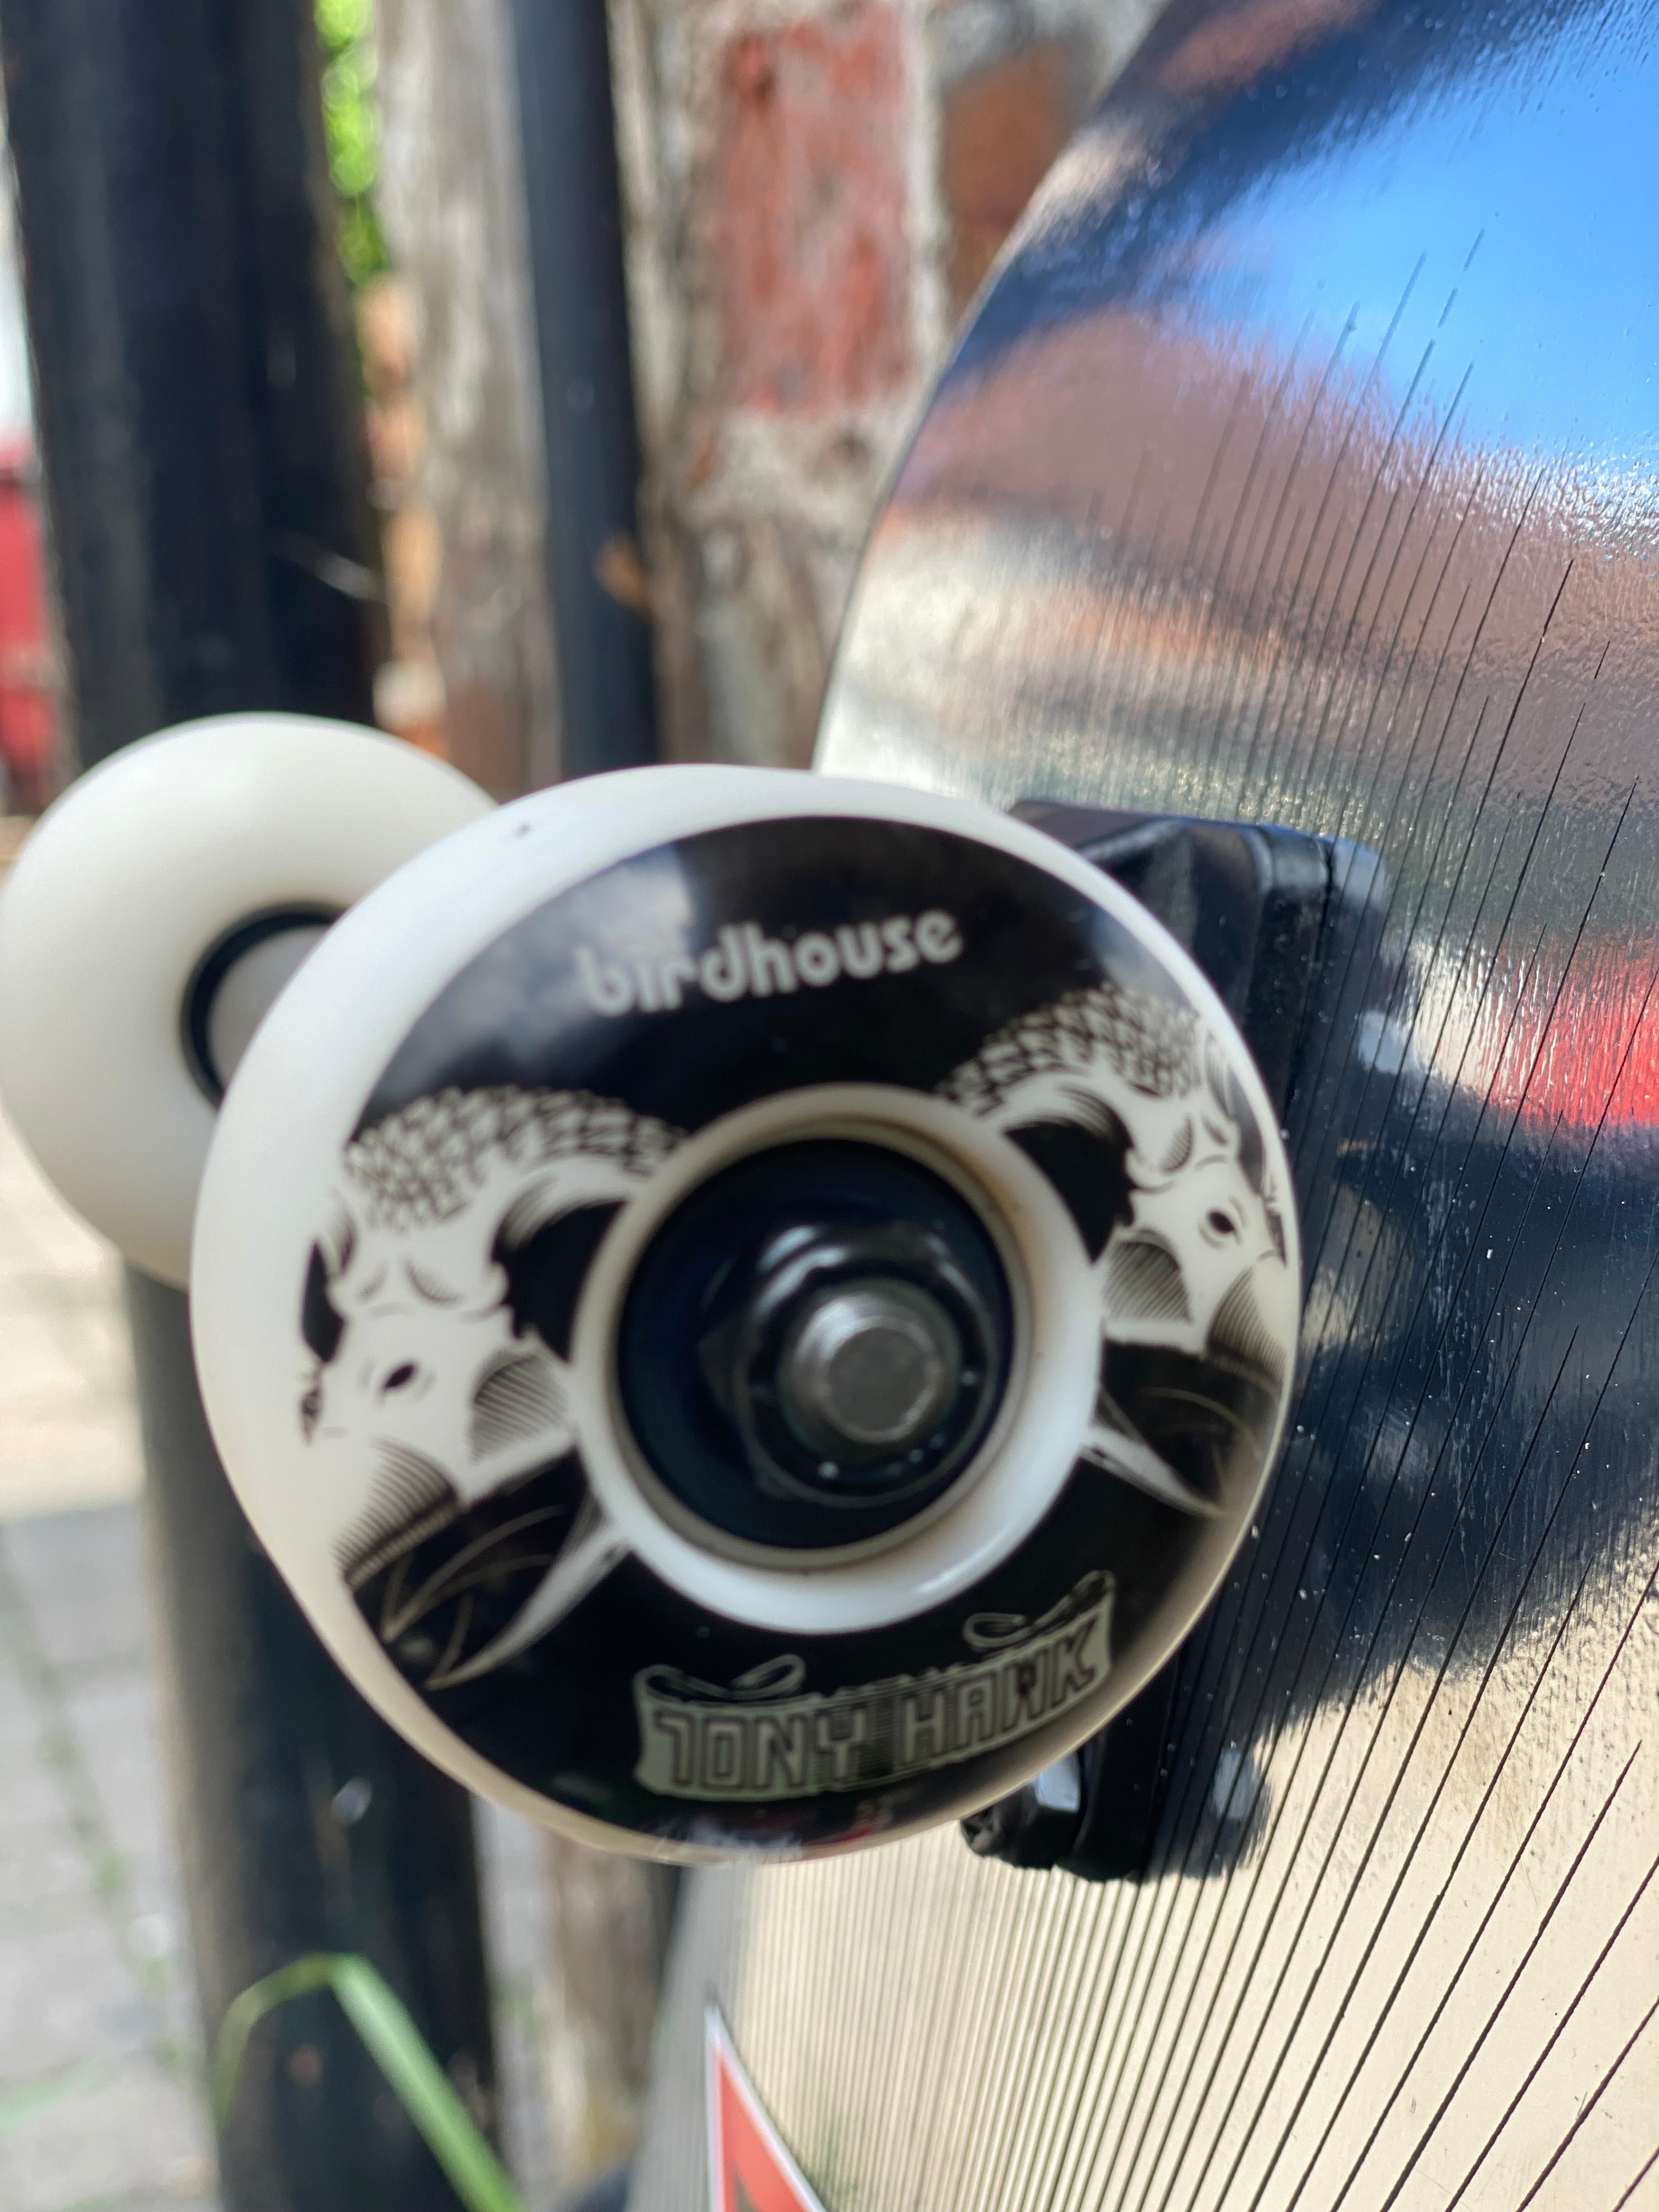 Birdhouse Hawk Skull 2 7.75” Complete Skateboard